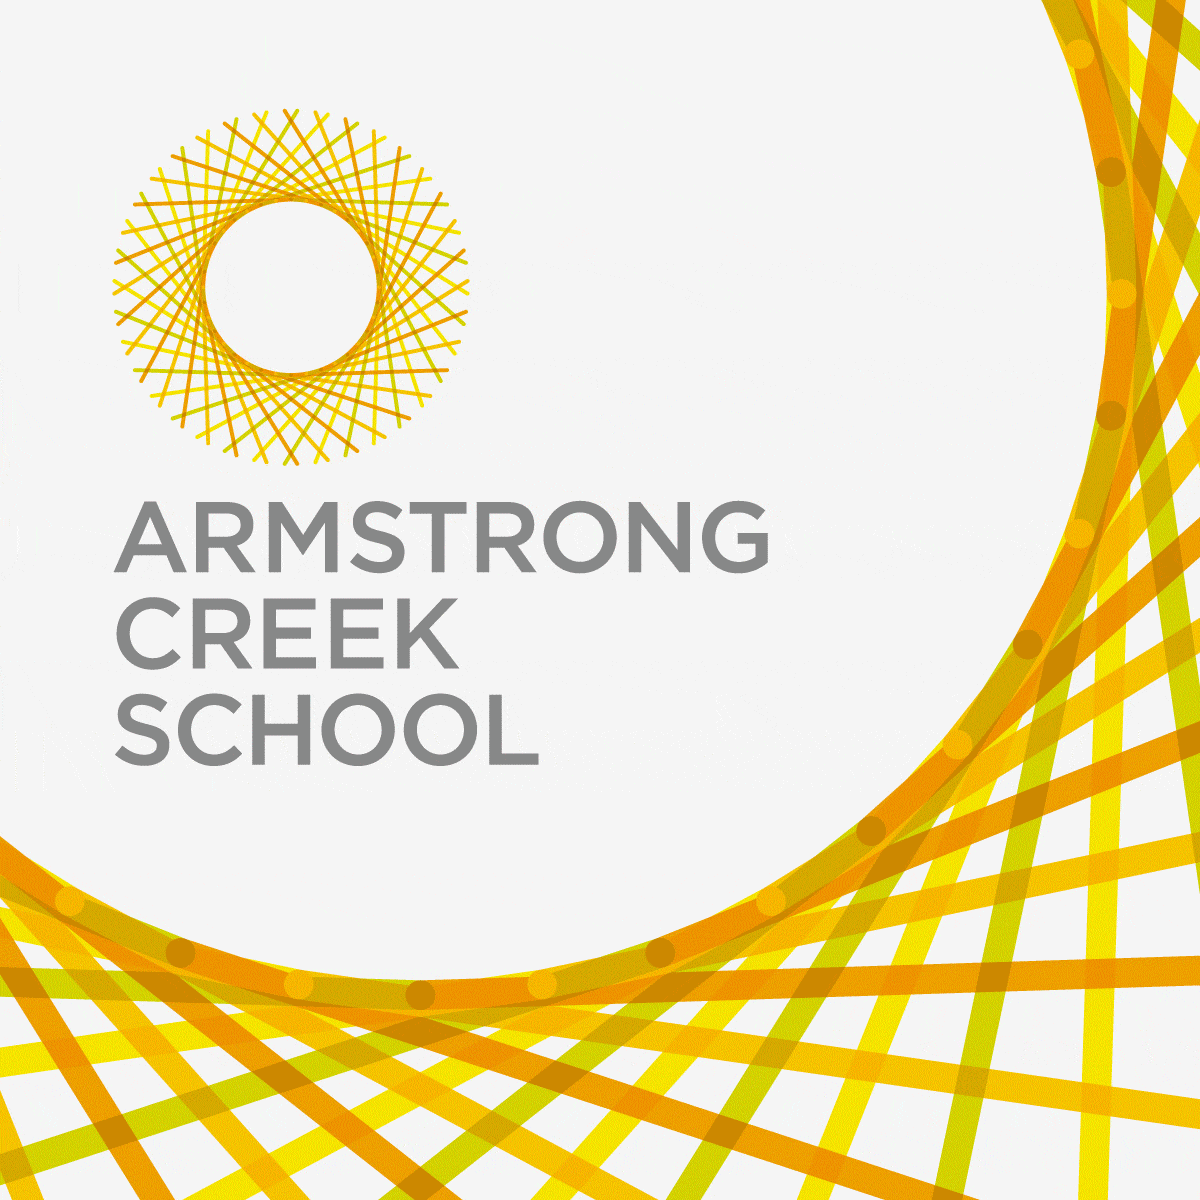 Armstrong Creek School Brand Identity